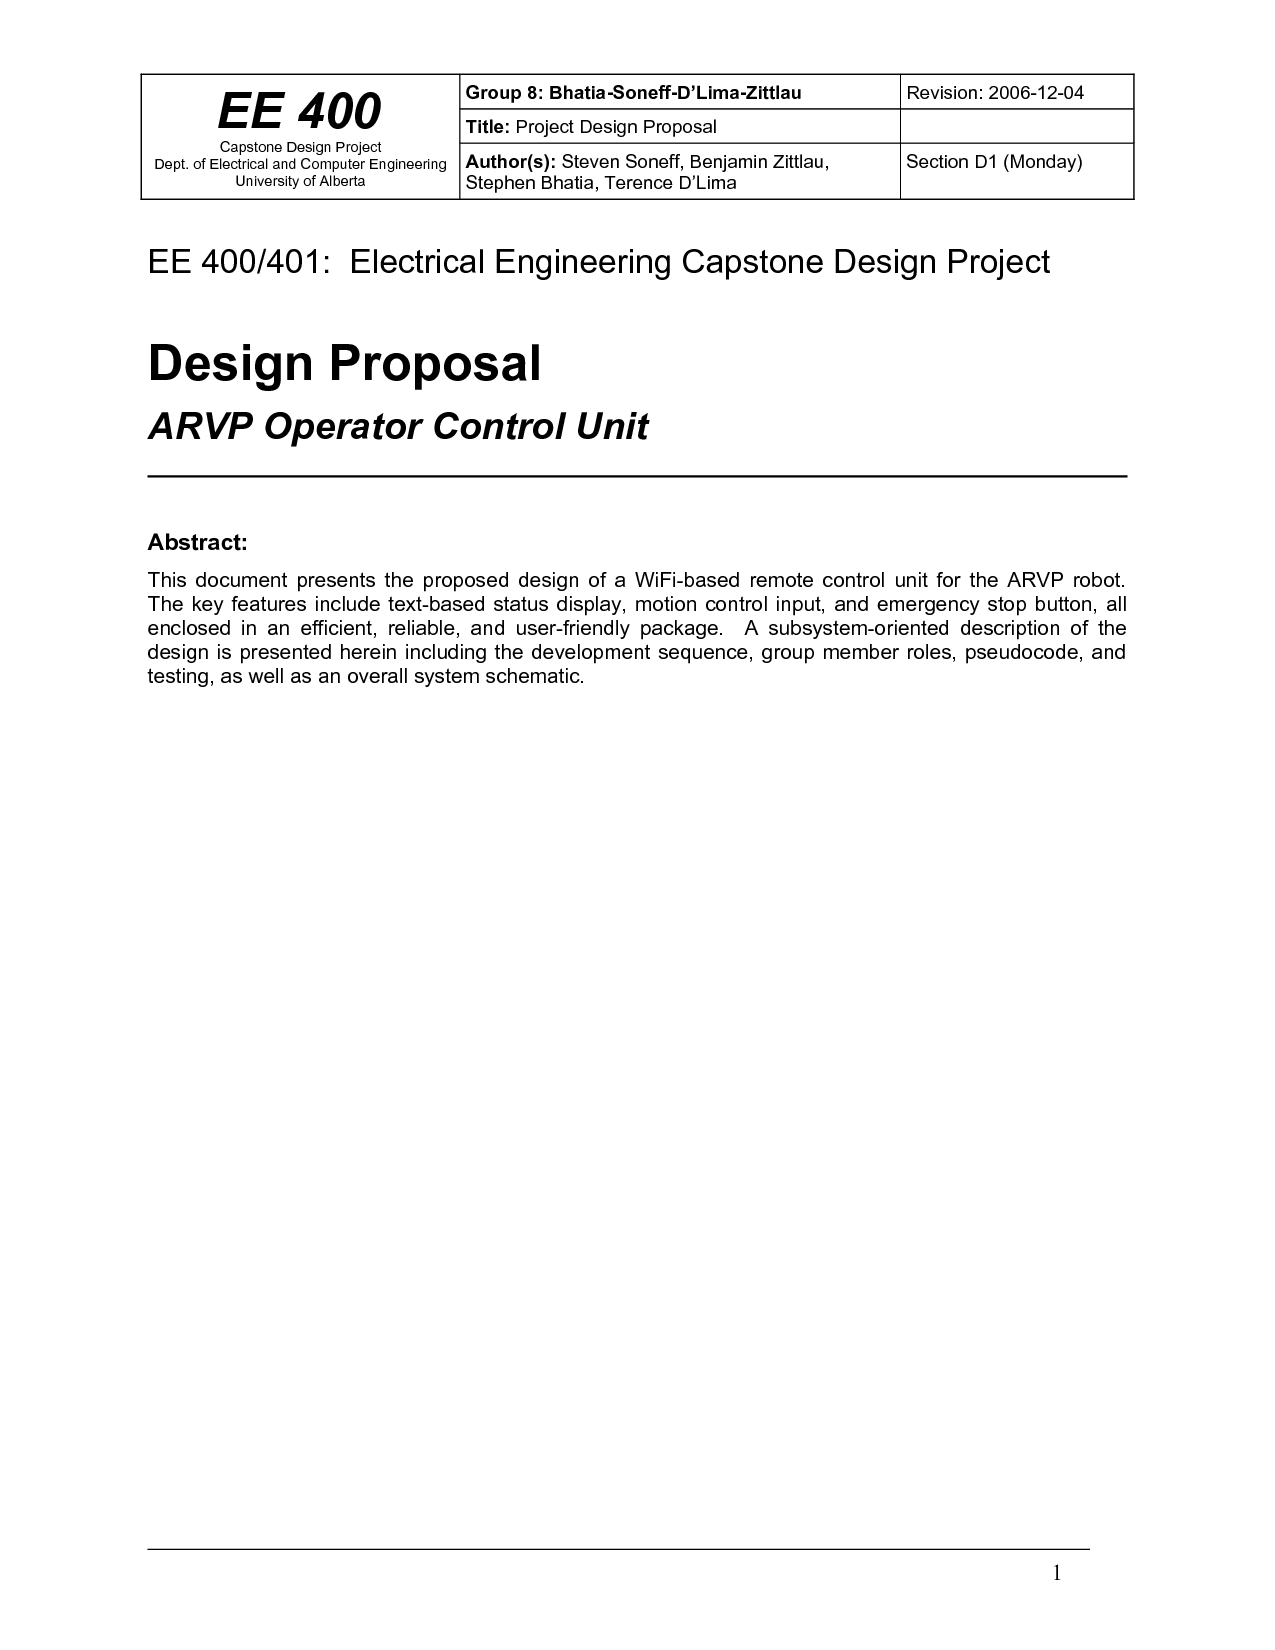 Engineering Design Proposal Sample